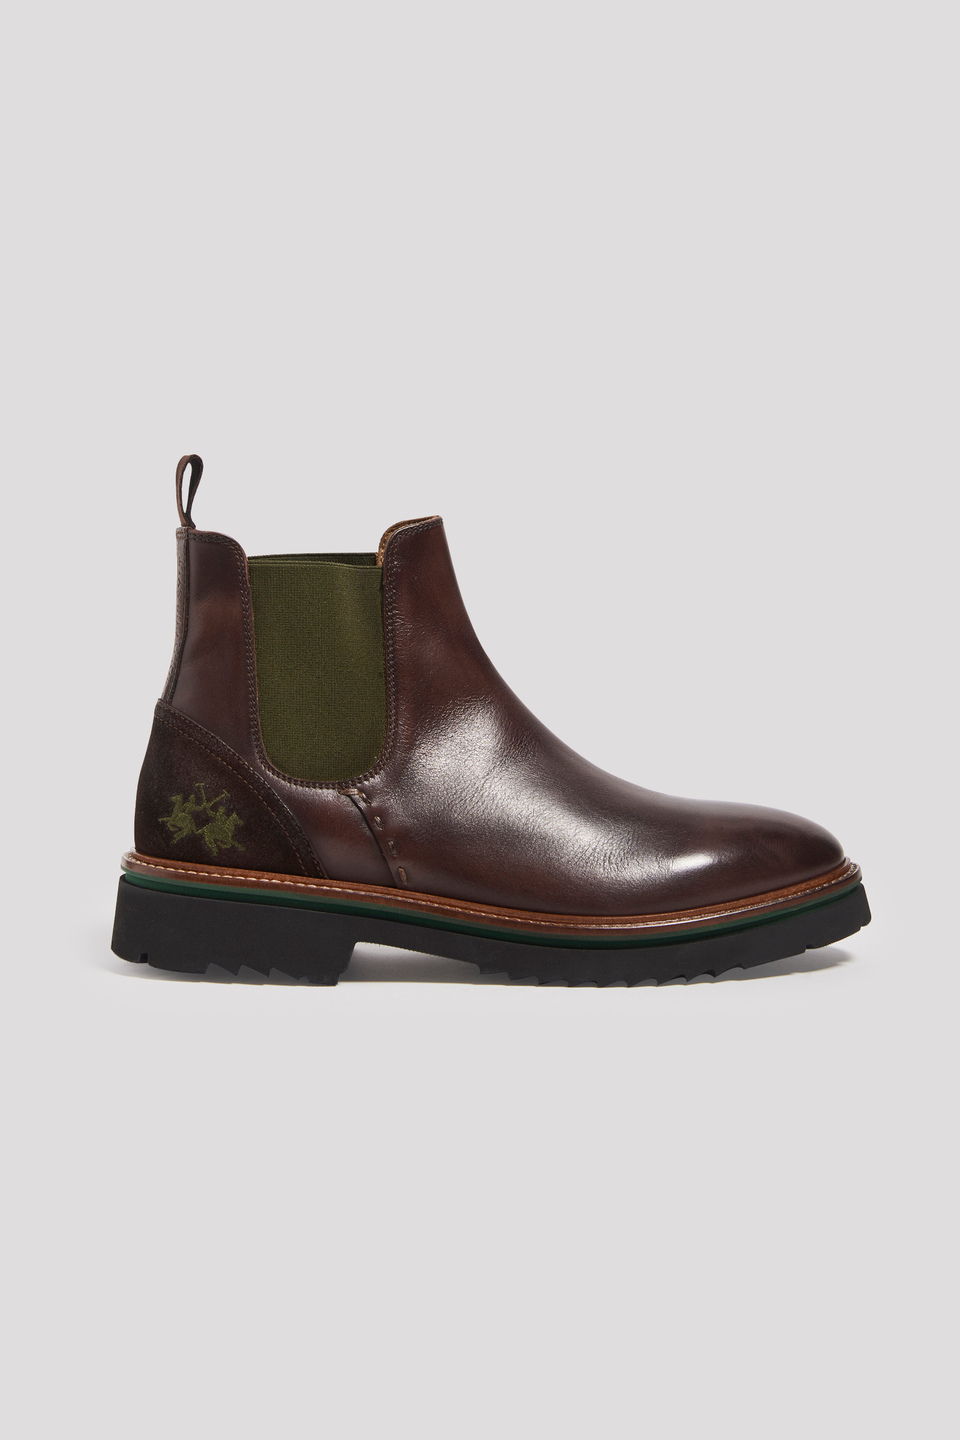 Leather desert boots with a crepe platform sole | La Martina - Official Online Shop